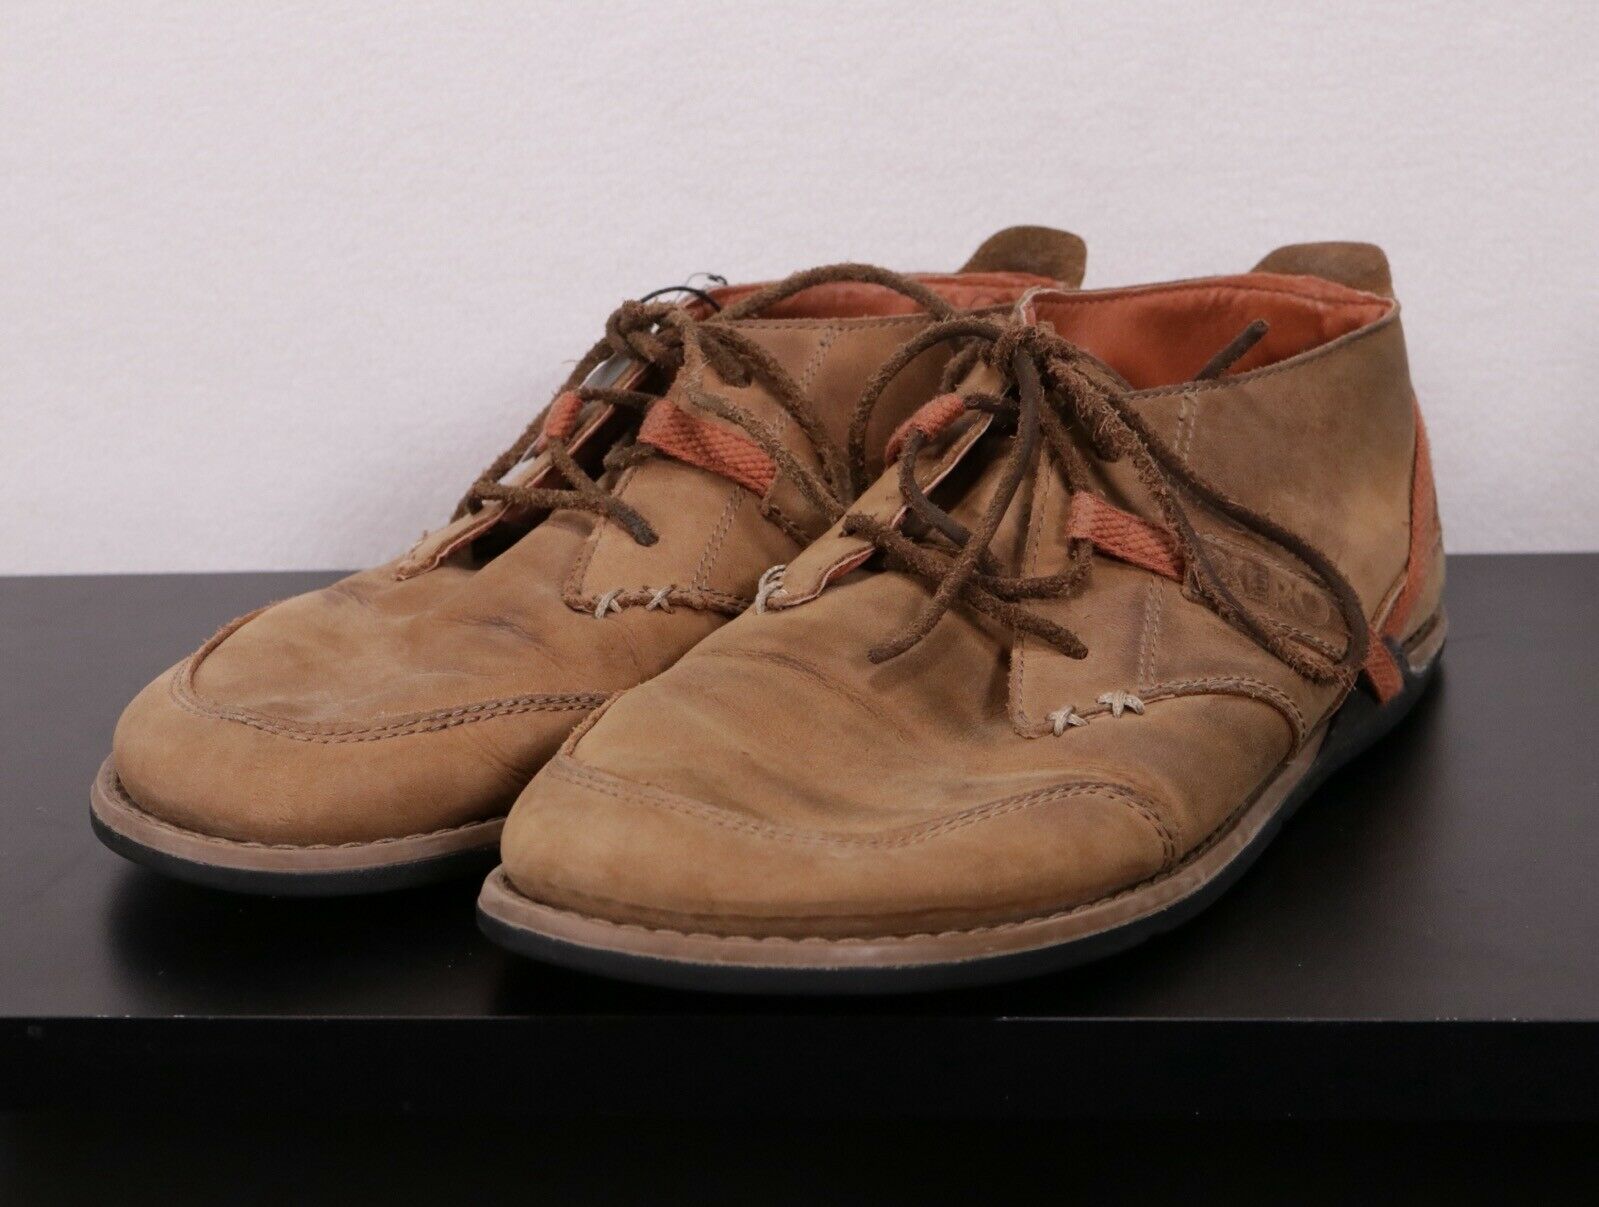 XERO SHOES Men’s US 9 Coalton Casual Minimalist Shoes Sneakers -Tan Orange